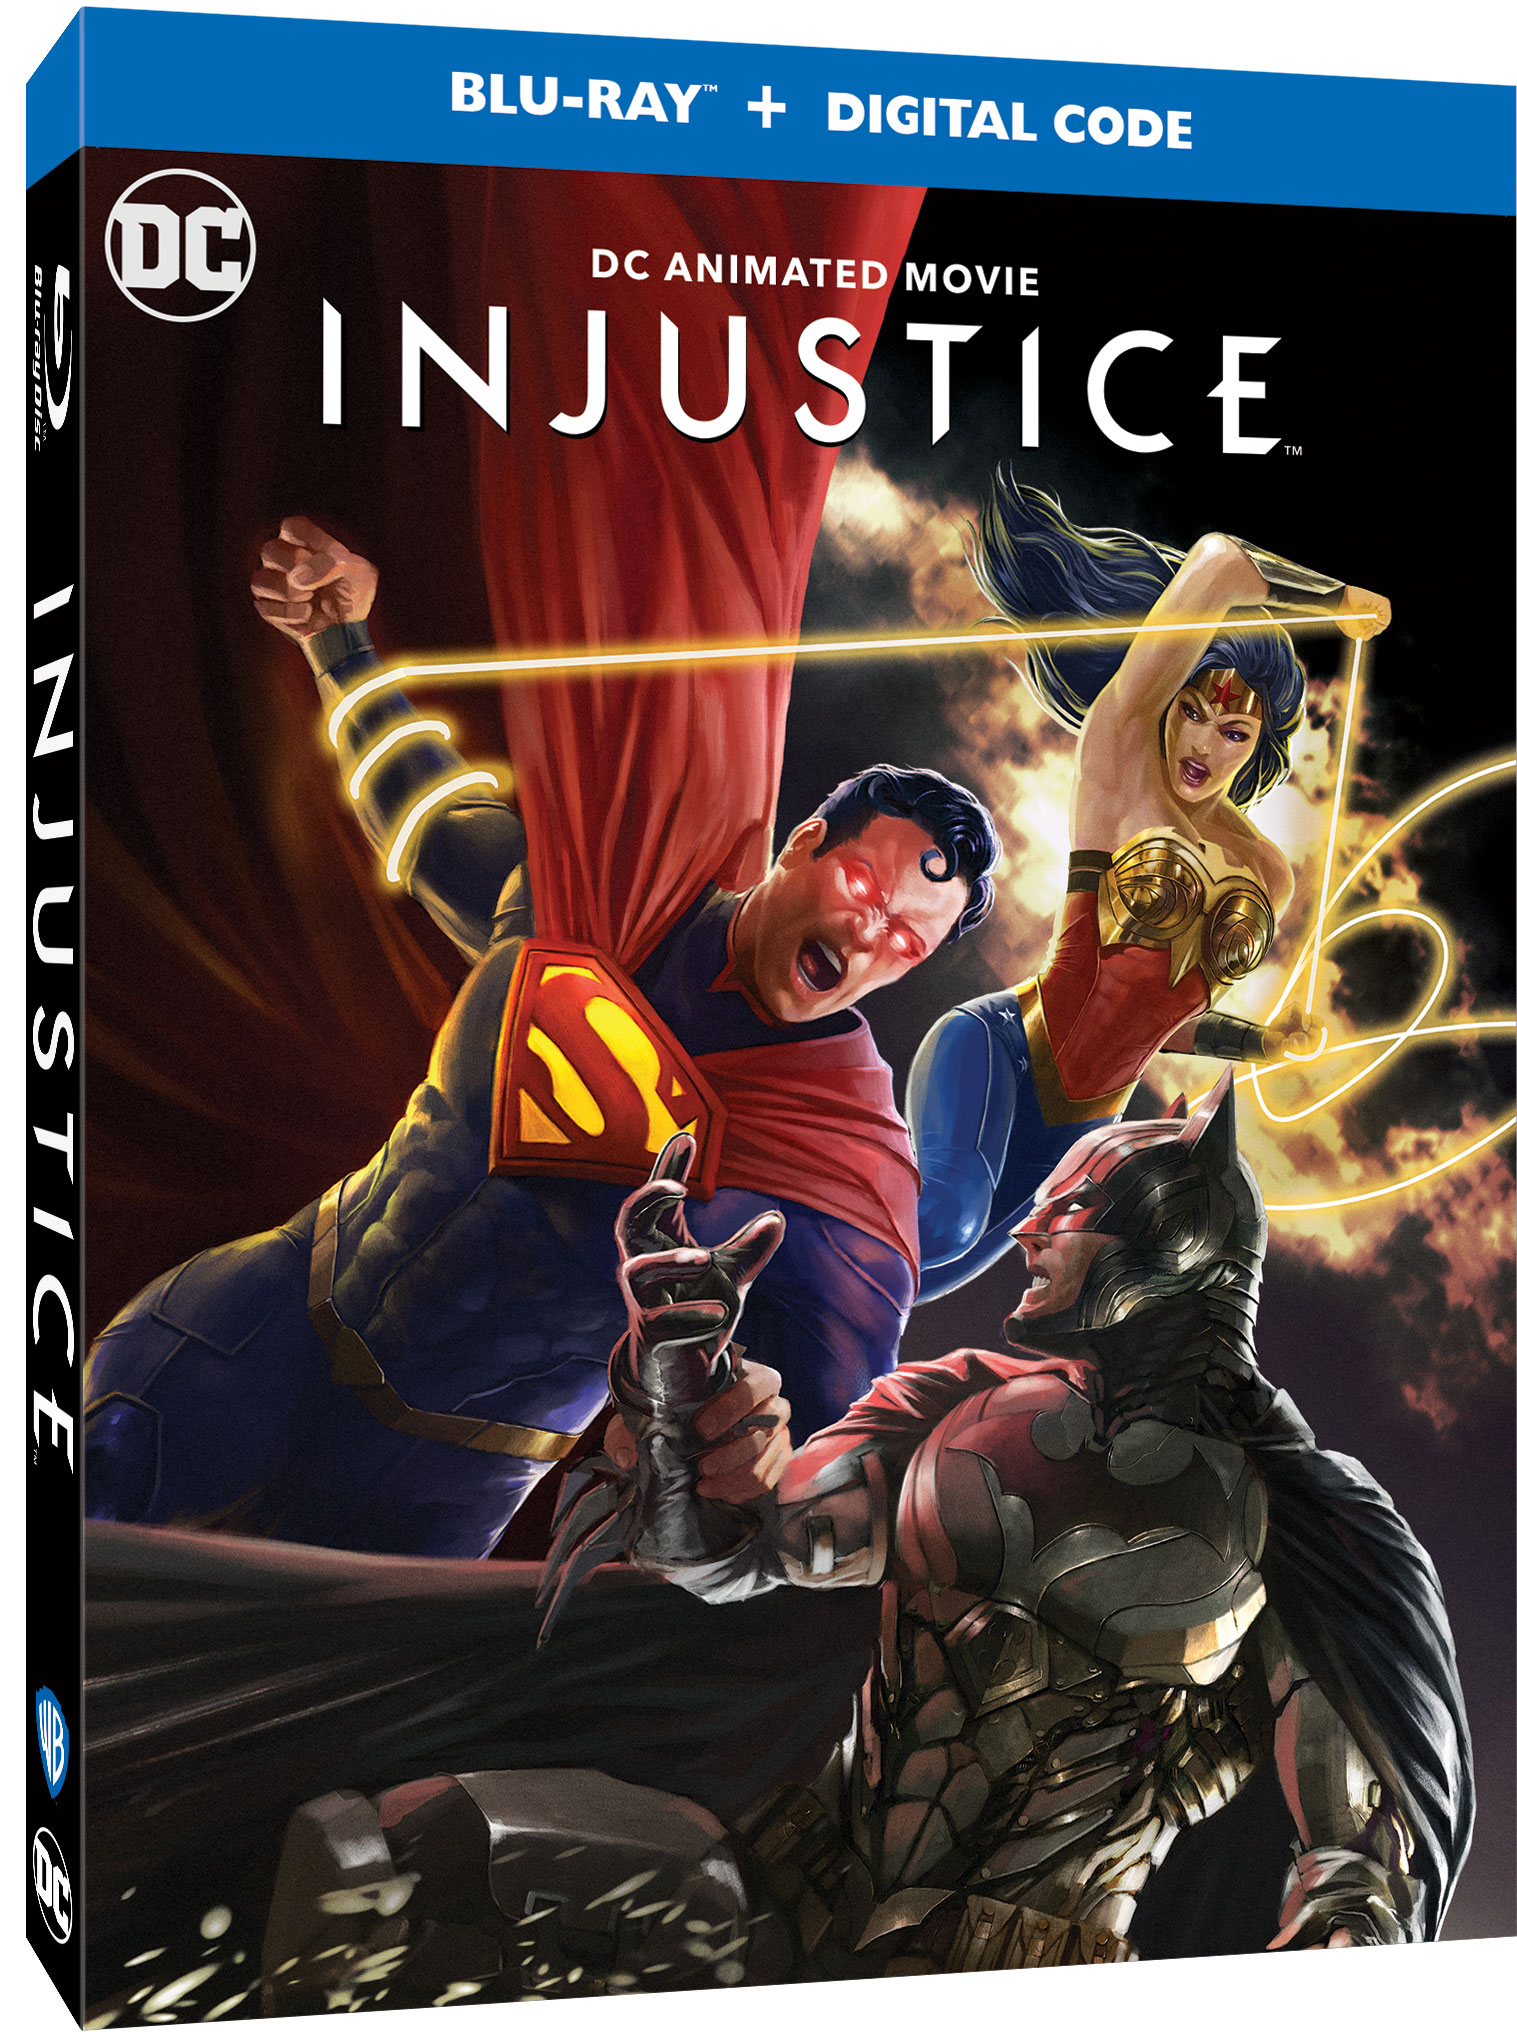 DC's INJUSTICE Animated Movie